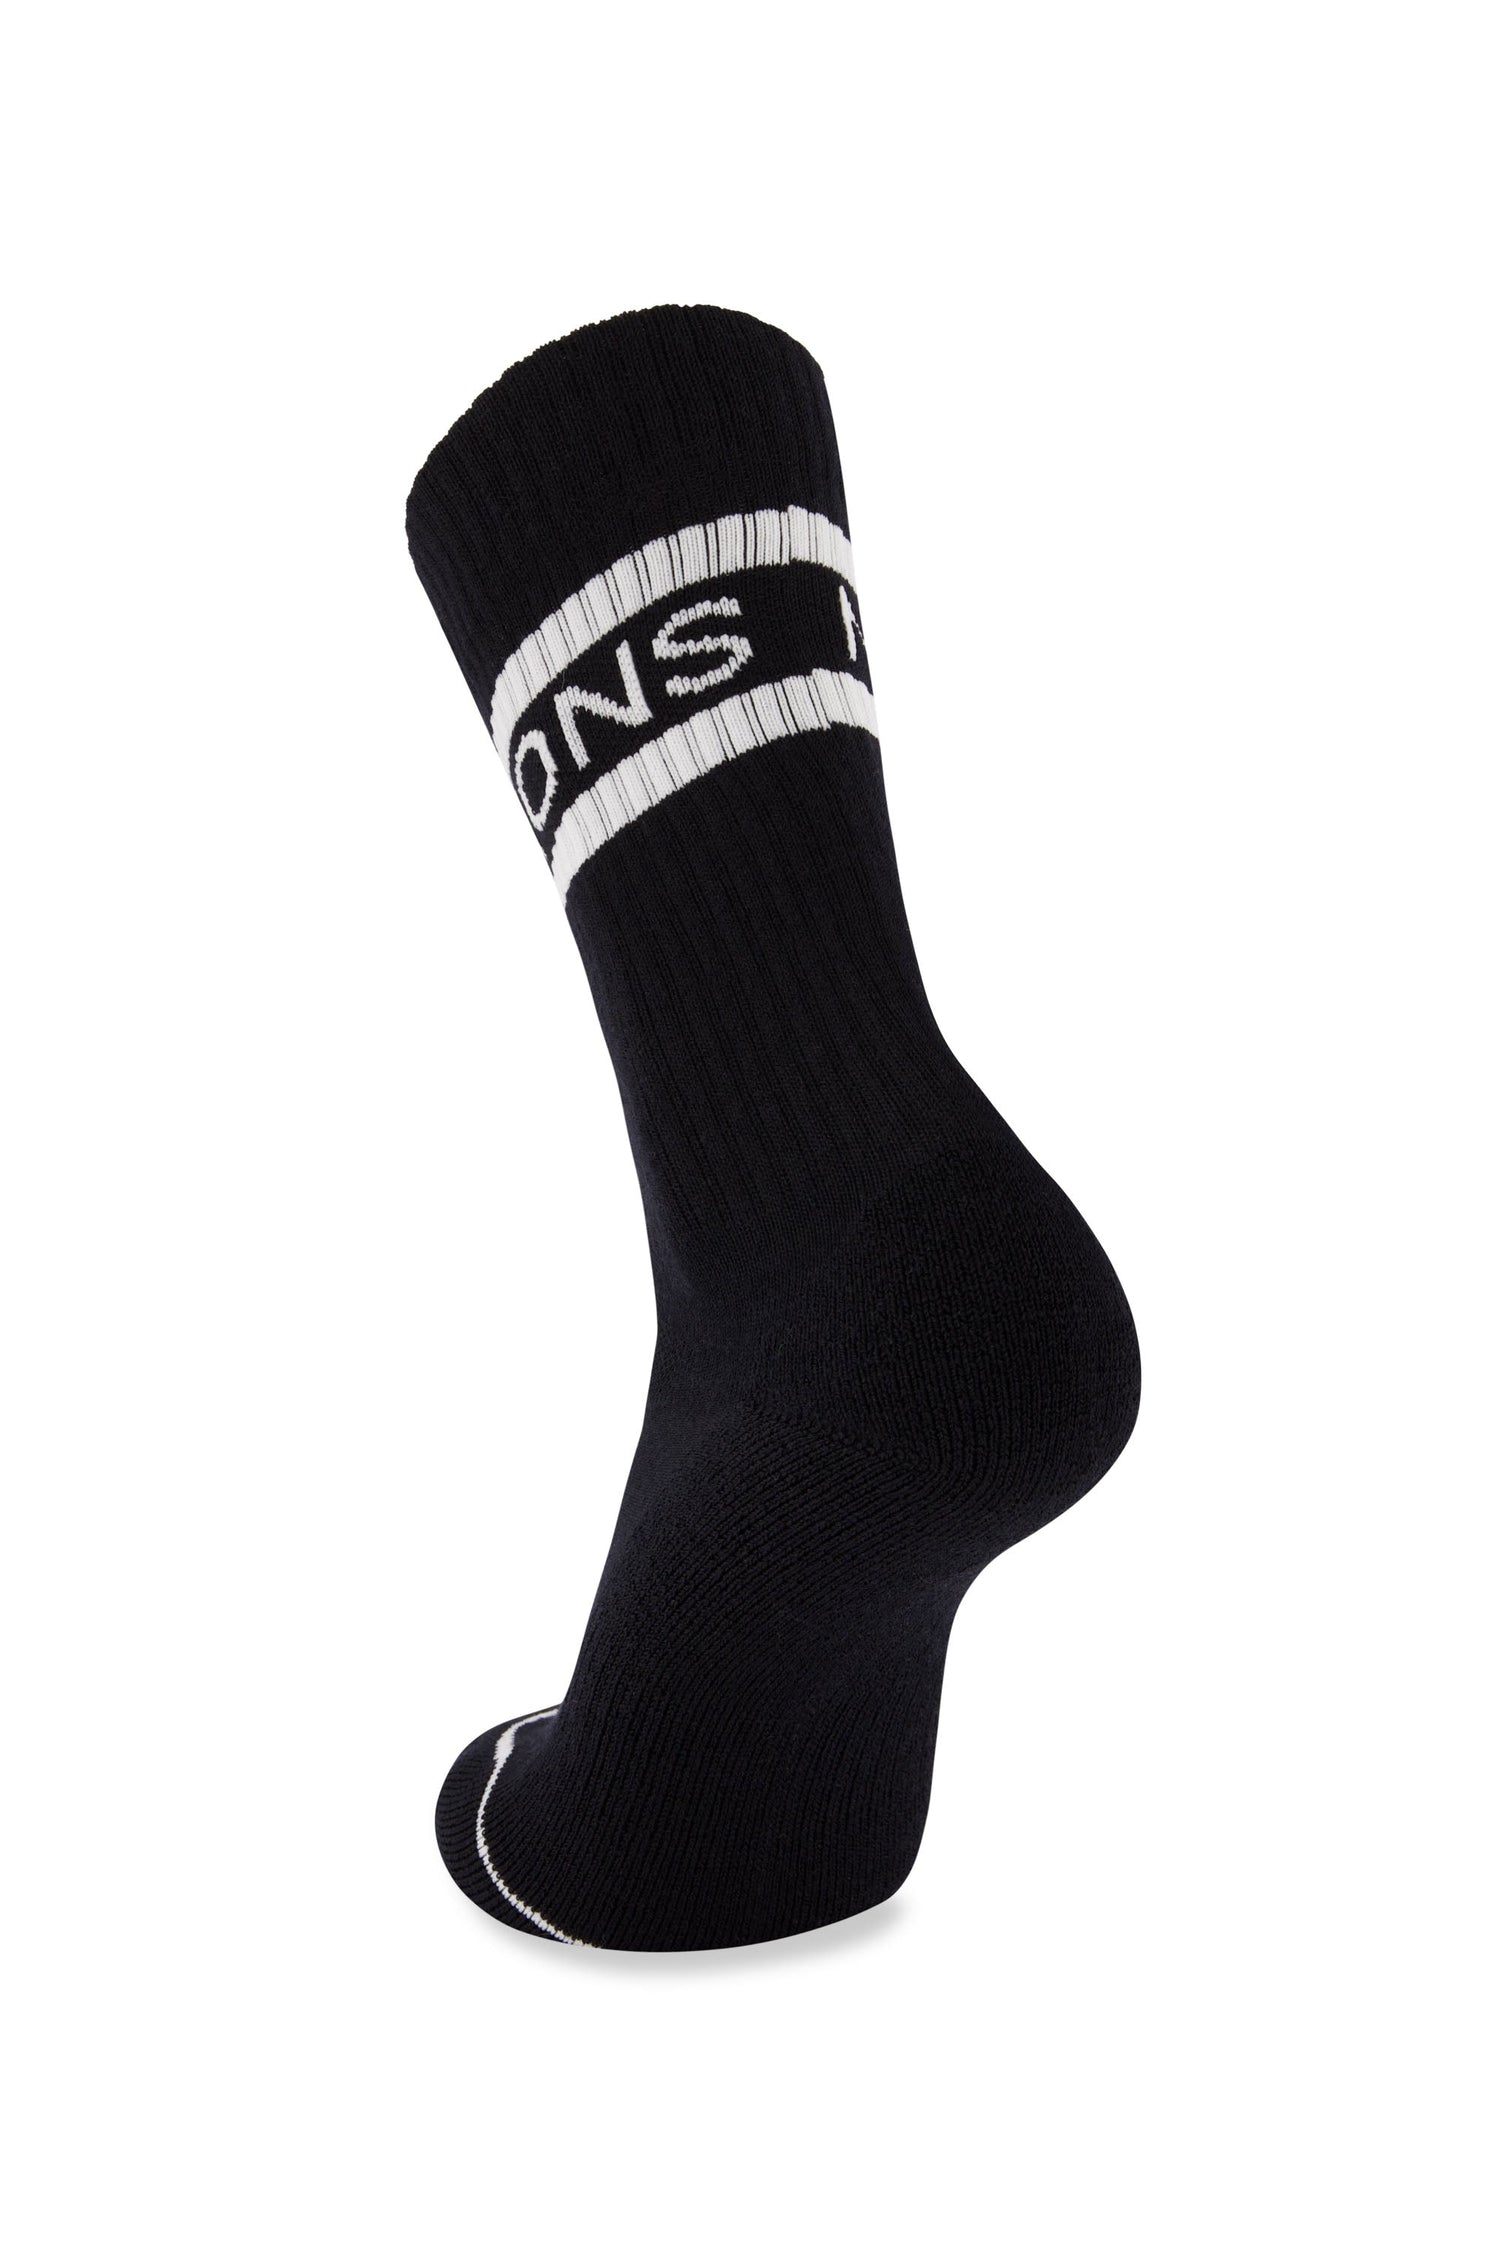 Mons Royale Unisex Signature Crew Sock - Merino Wool Black / White Socks